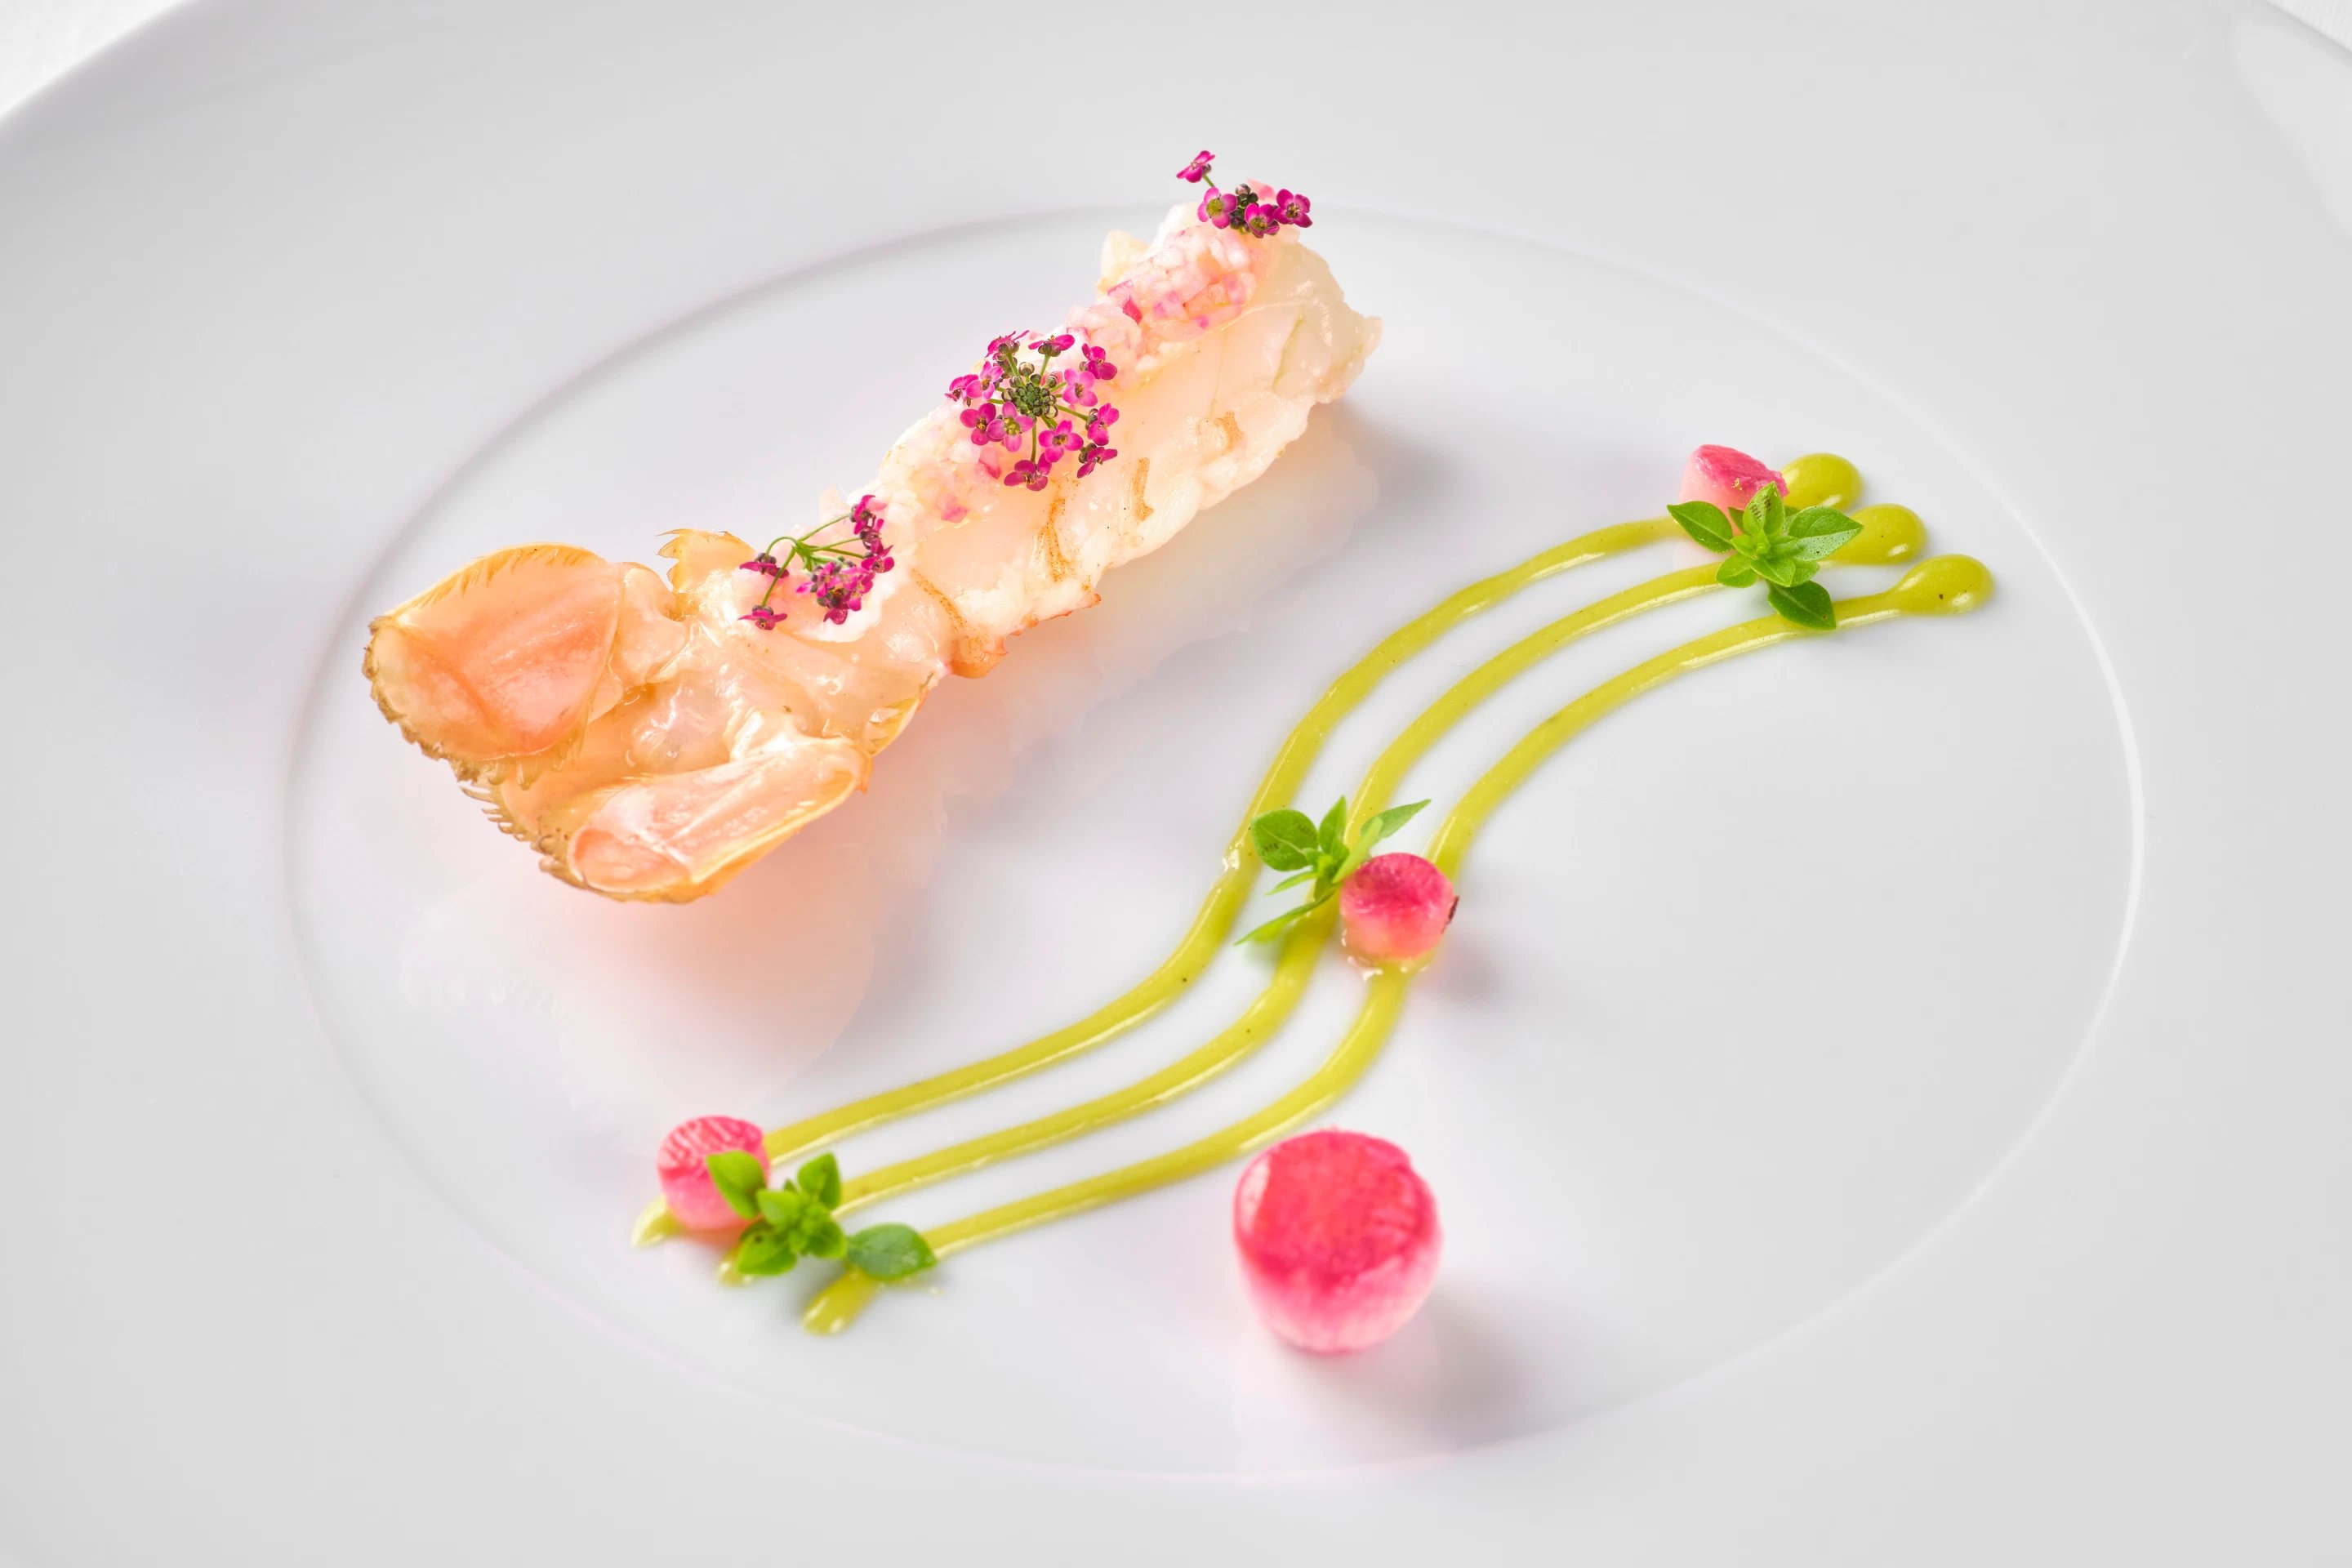 Tiara Yaktsa | Starred Gastronomic Restaurant near Cannes